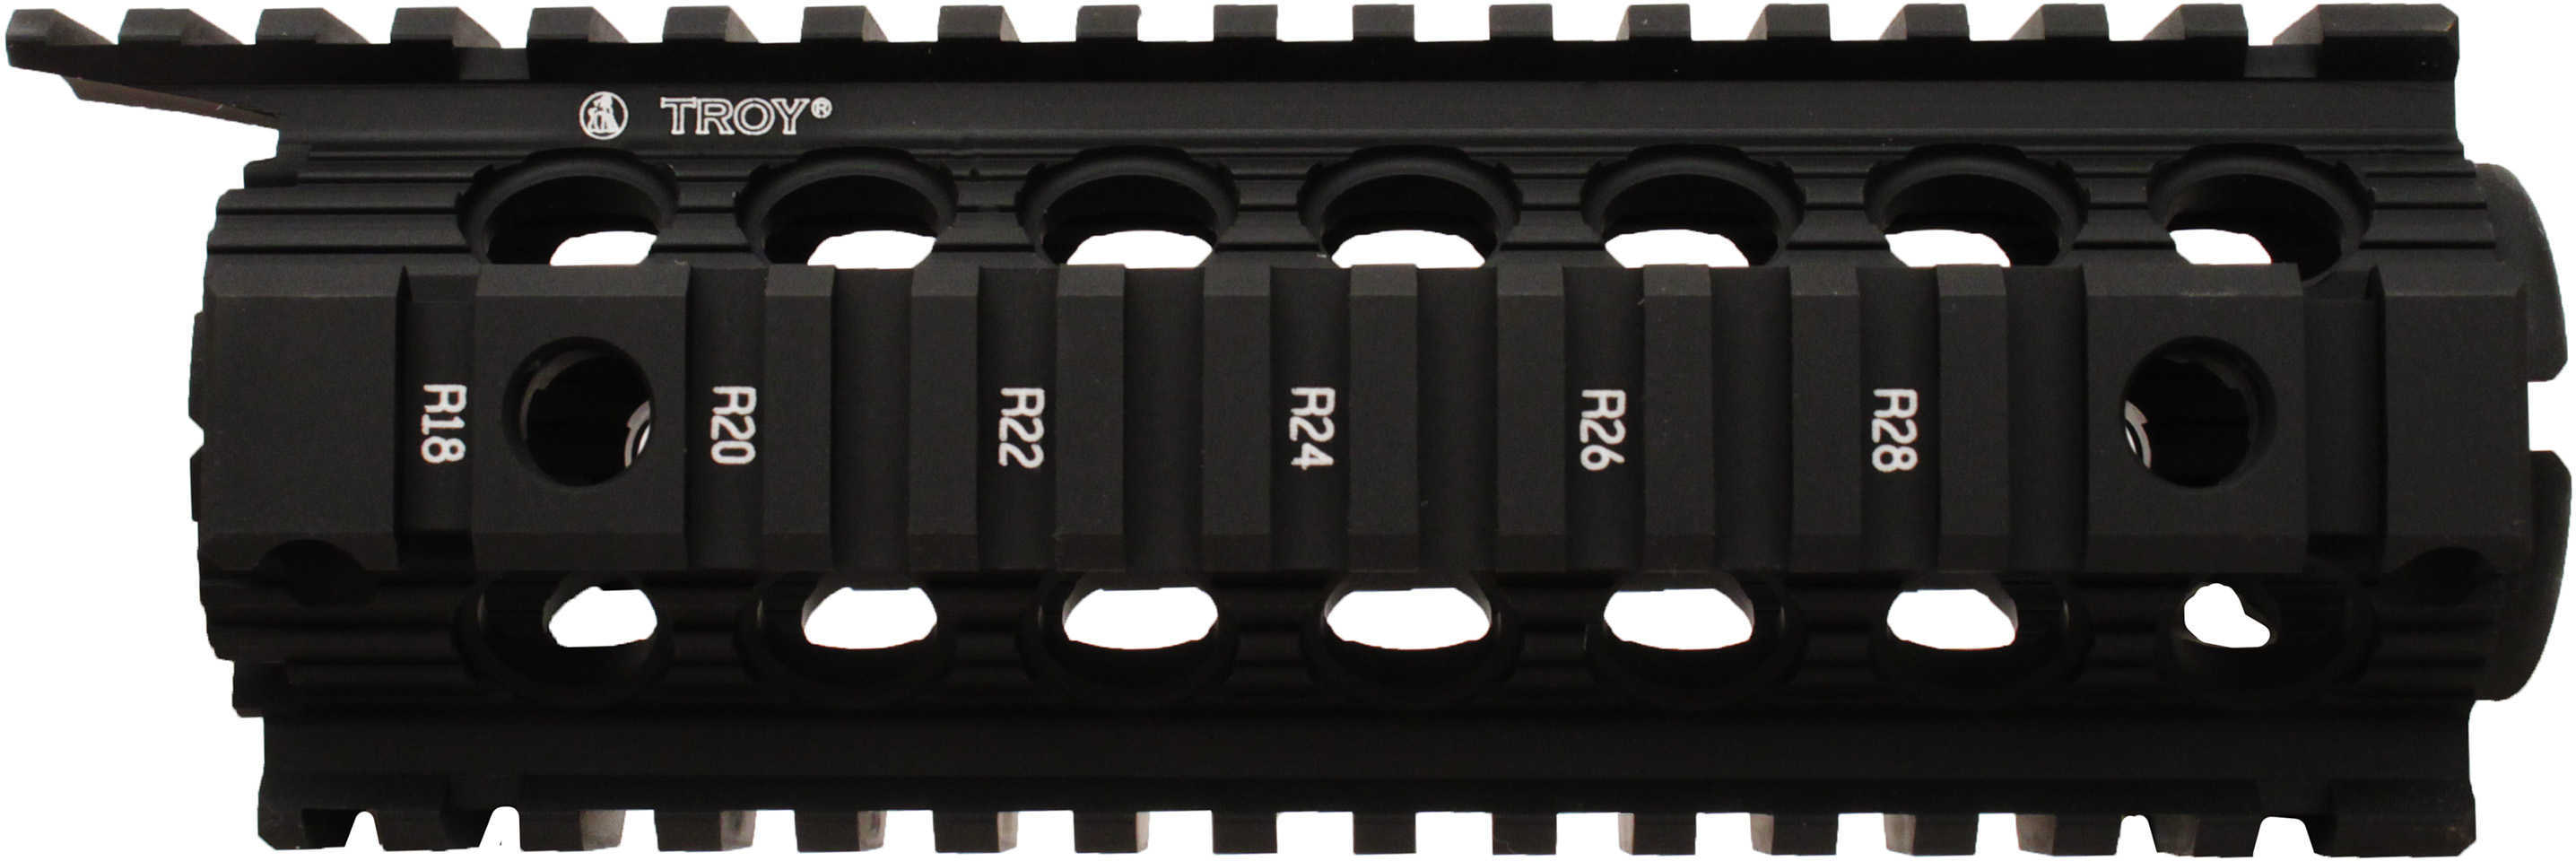 TROY Enhanced Rail 7" Drop In Picatinny on All Four Sides Built-in Sockets for QD Swivels SRAI-DID-D7BT-00